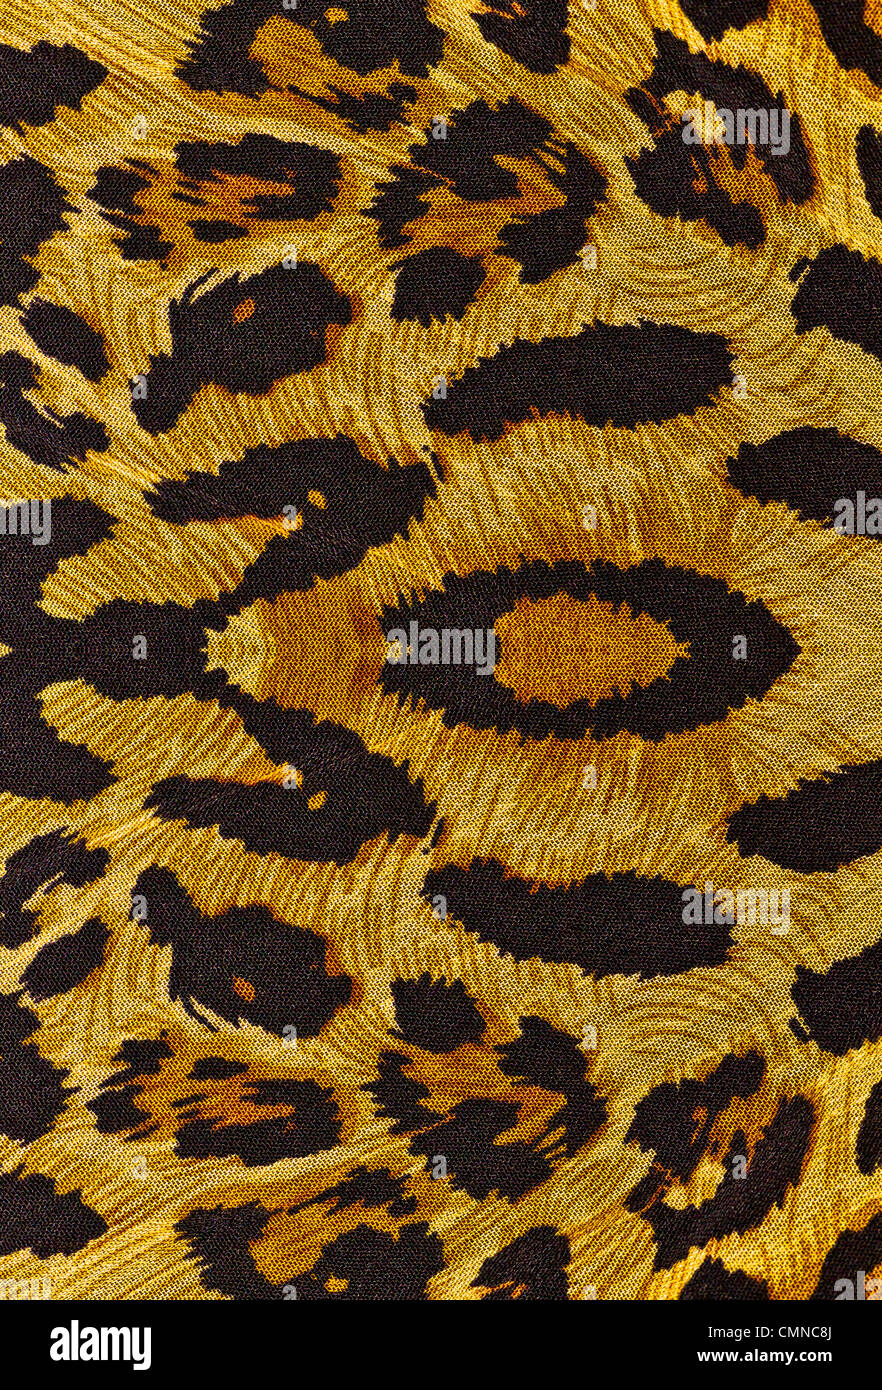 Animal print on fabric. Stock Photo